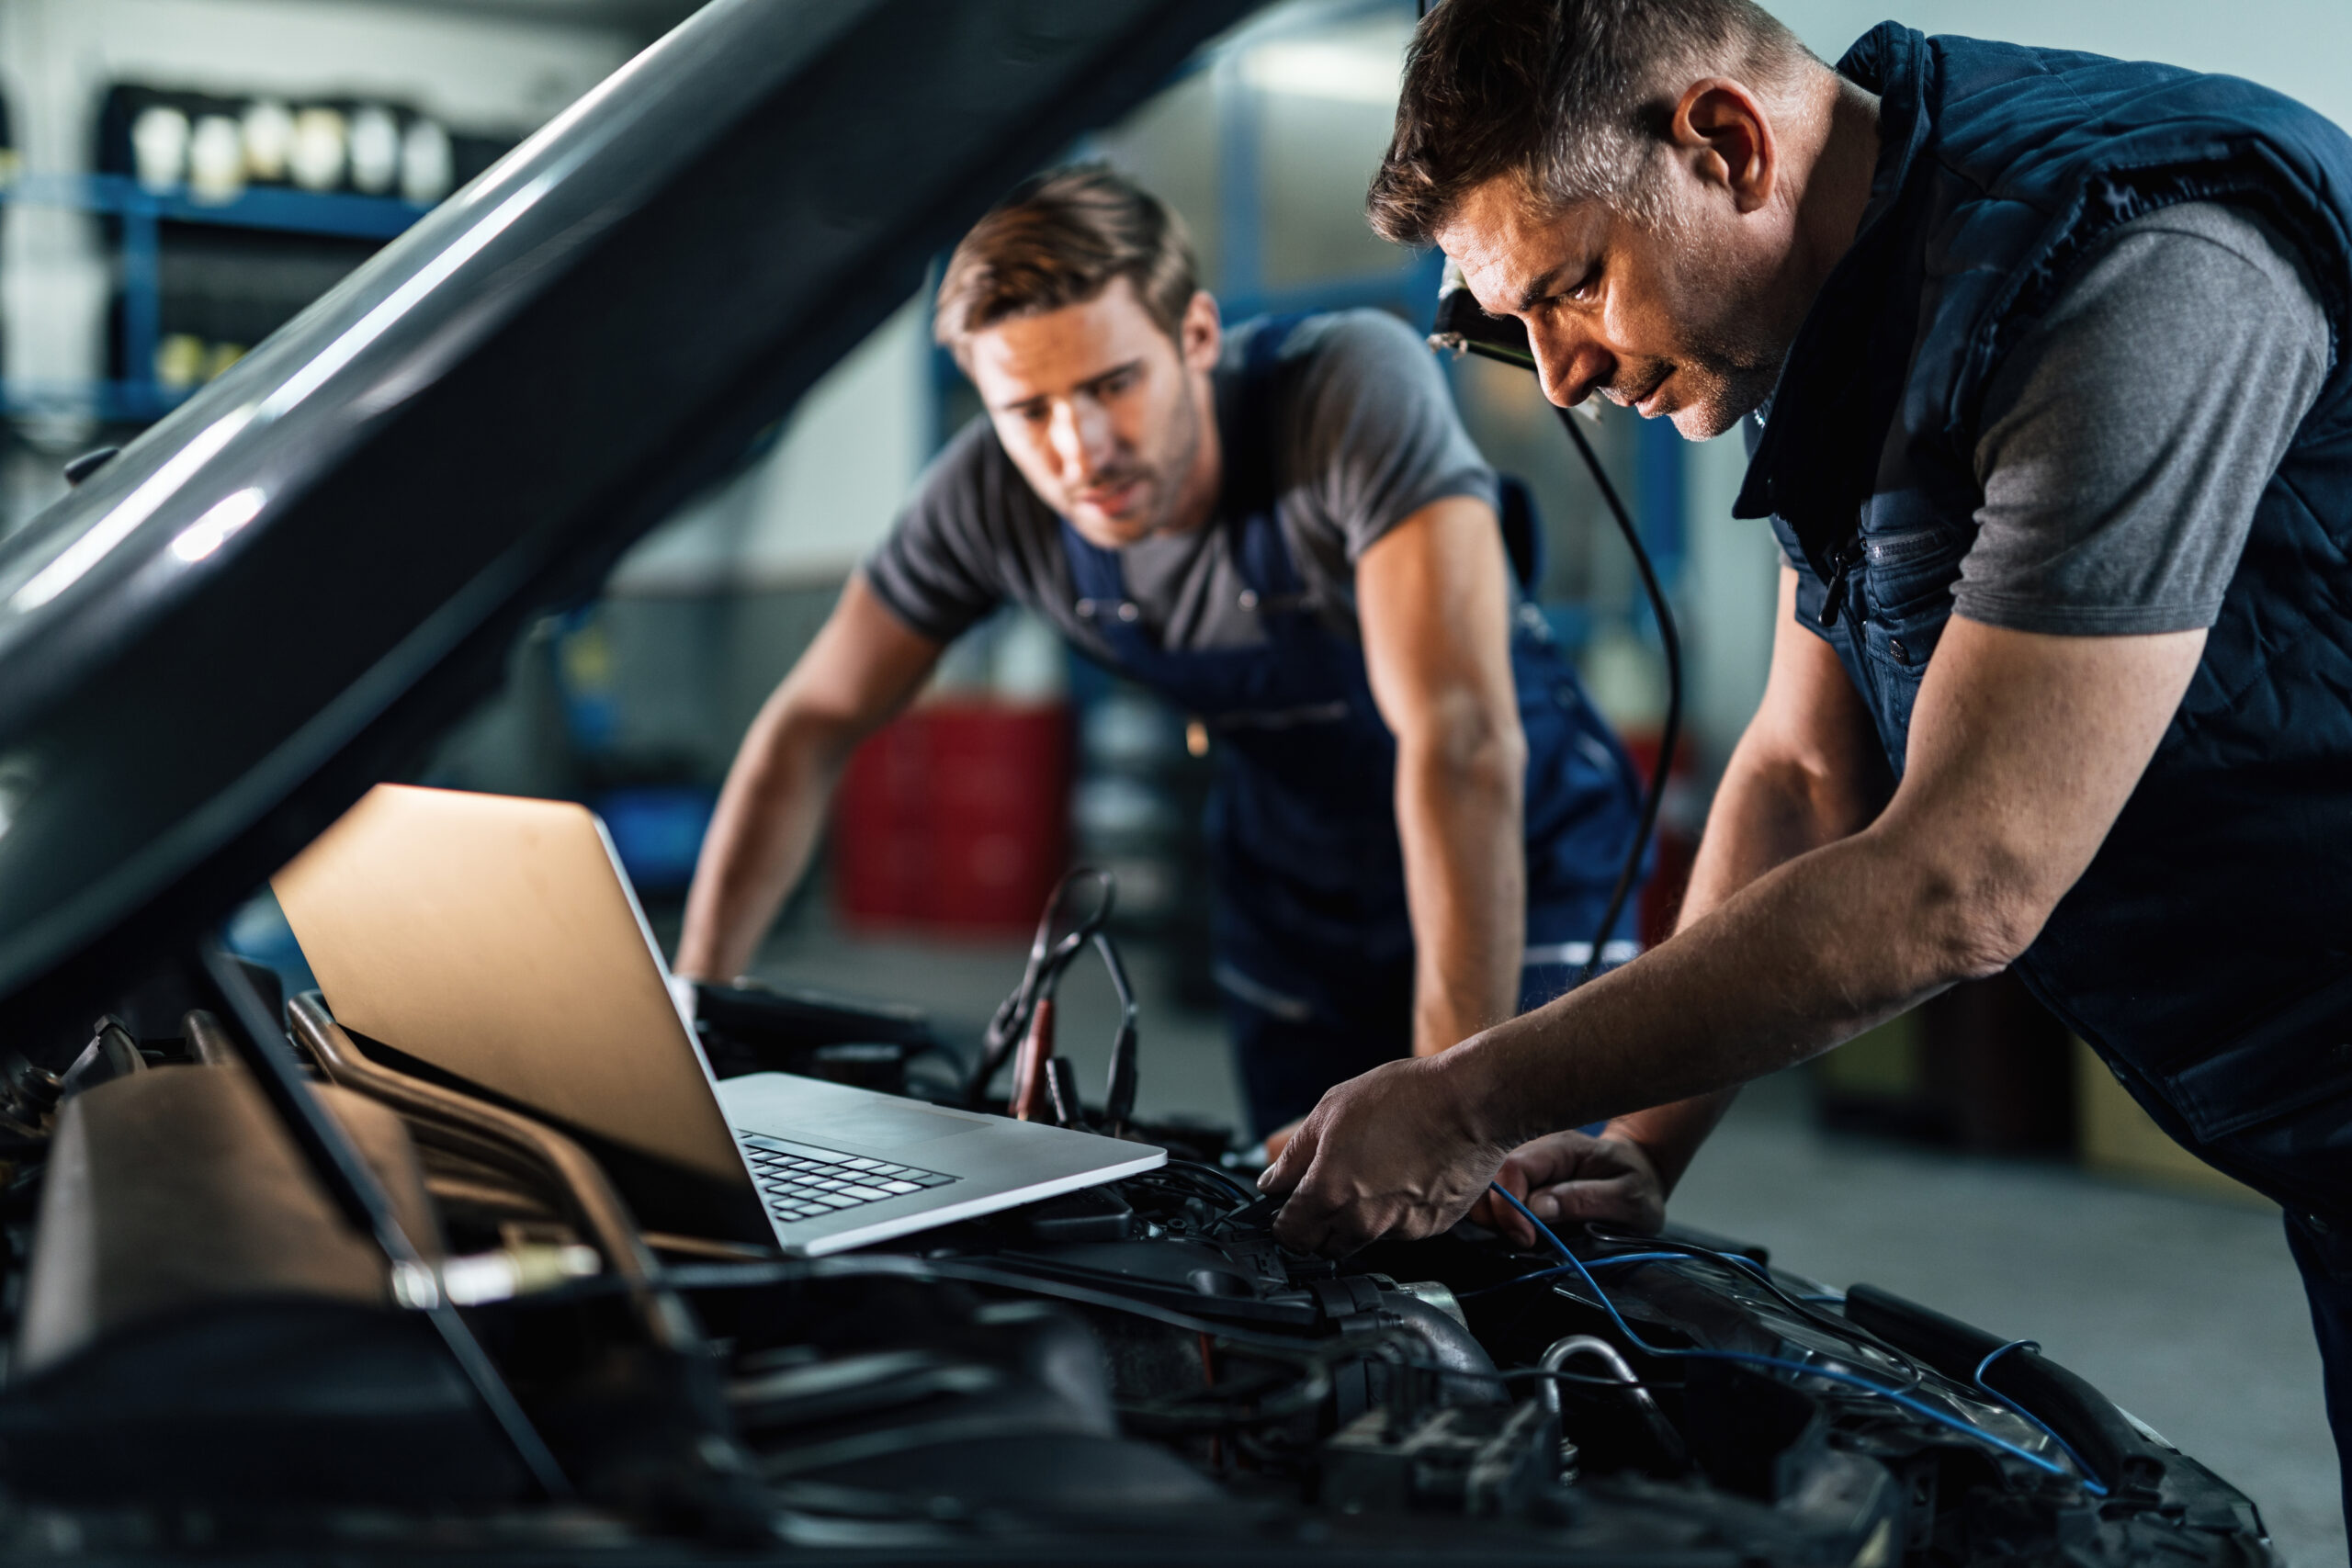 Car repairmen using laptop while doing car engine diagnostic in auto repair shop.